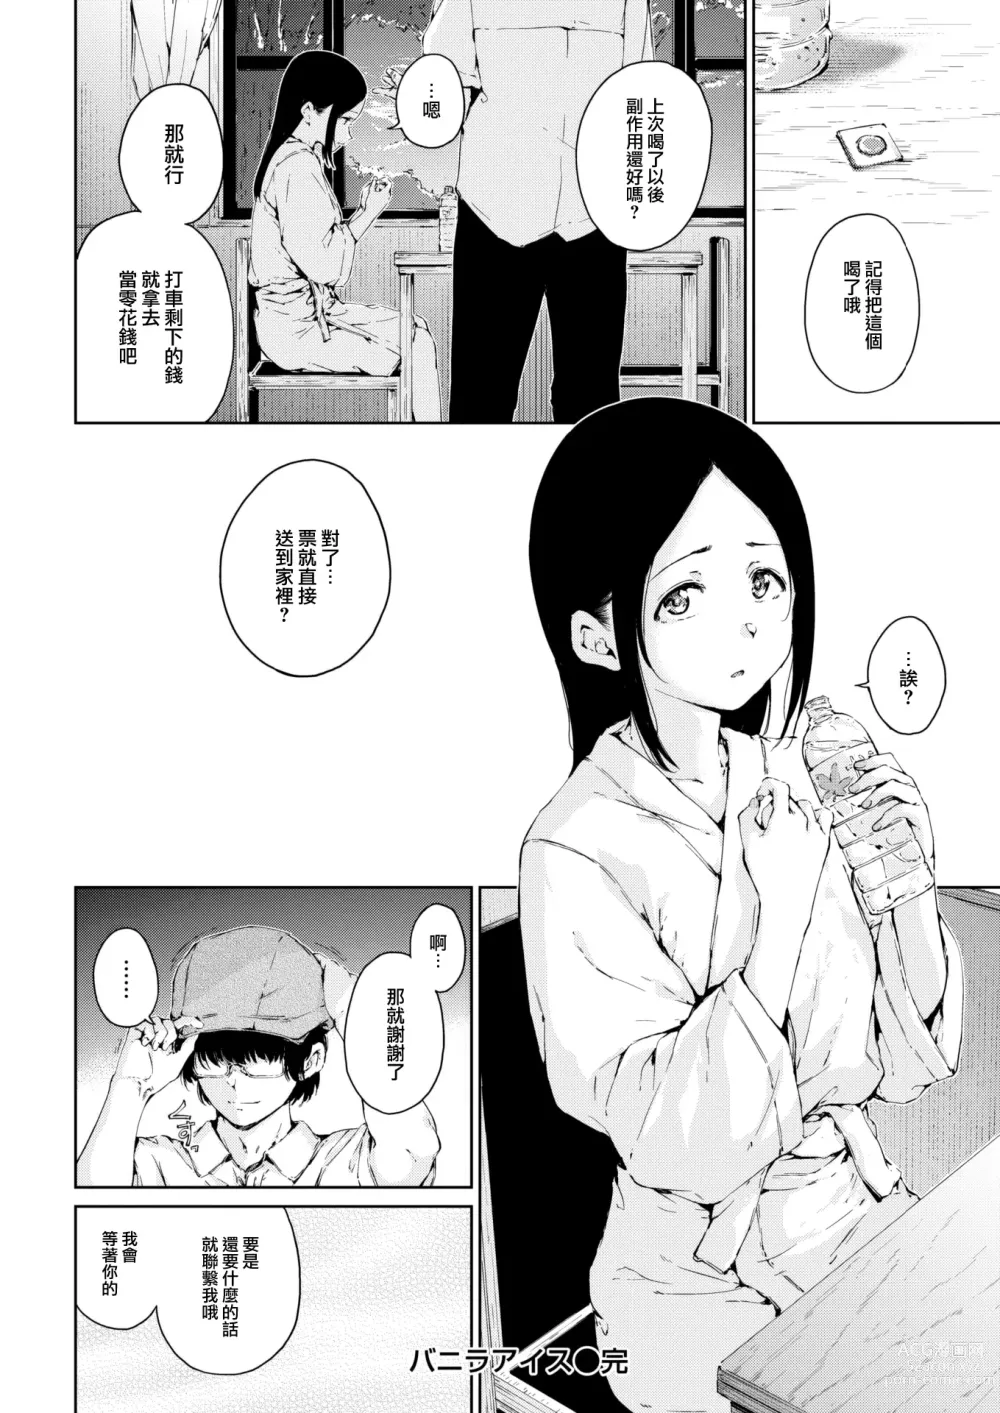 Page 21 of manga Vanilla Ice